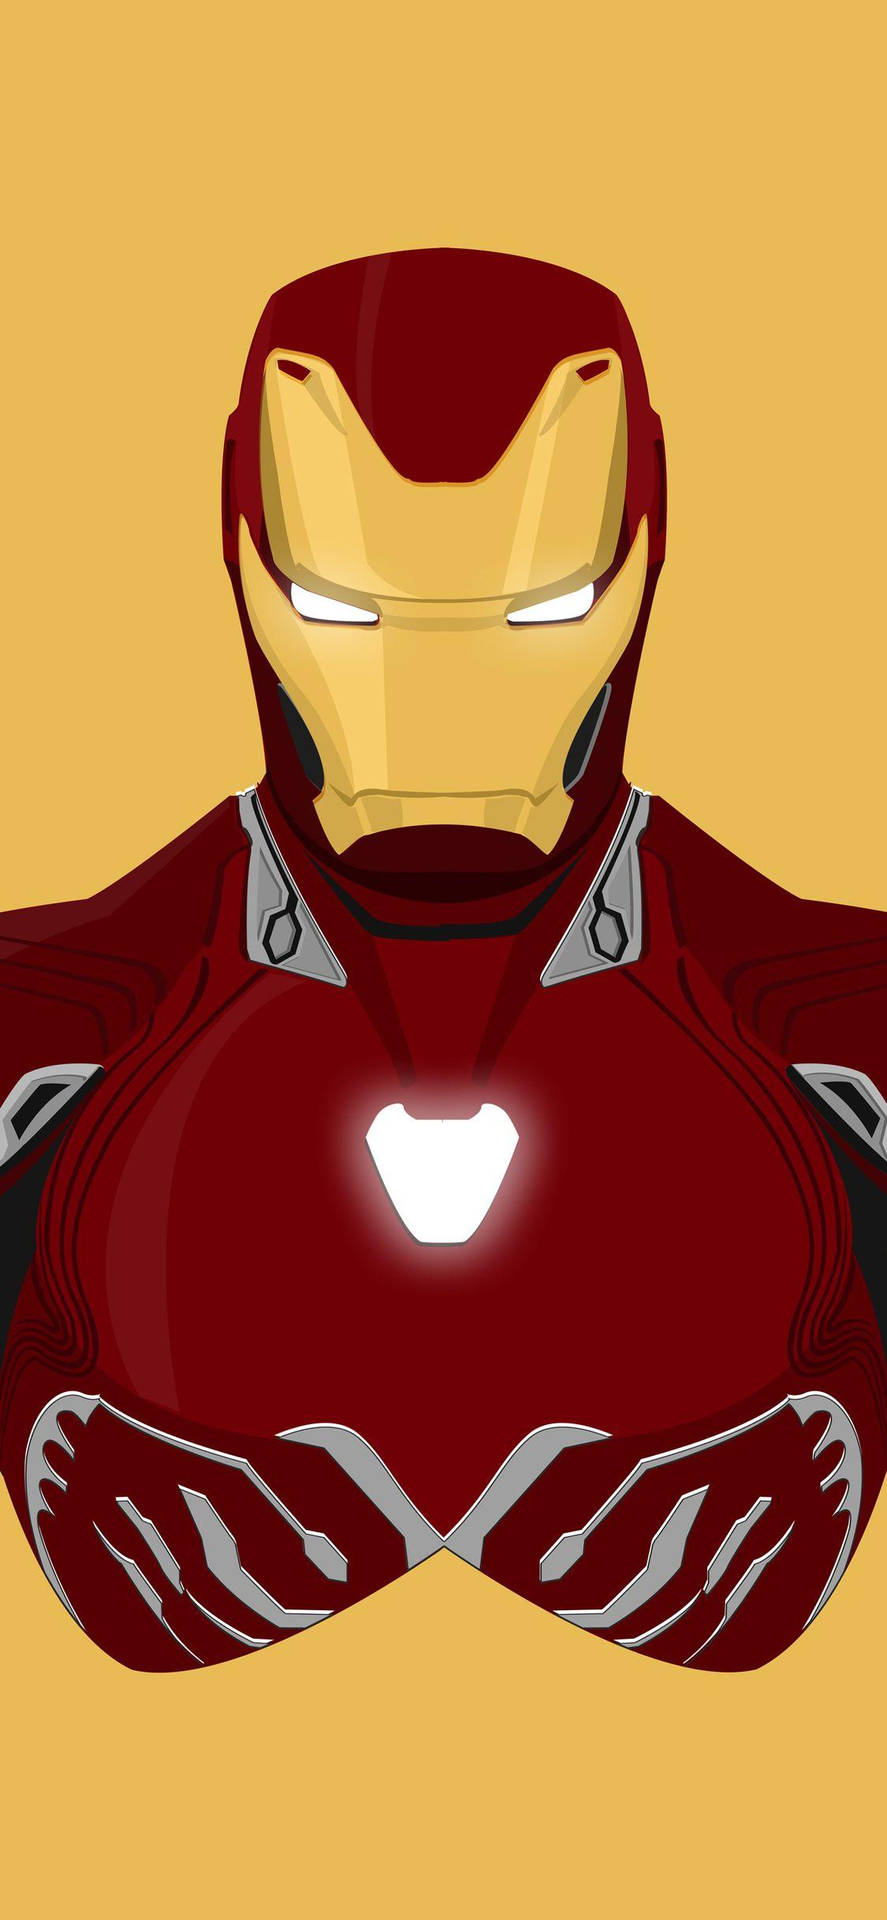 Aesthetic Iron Man Iphone